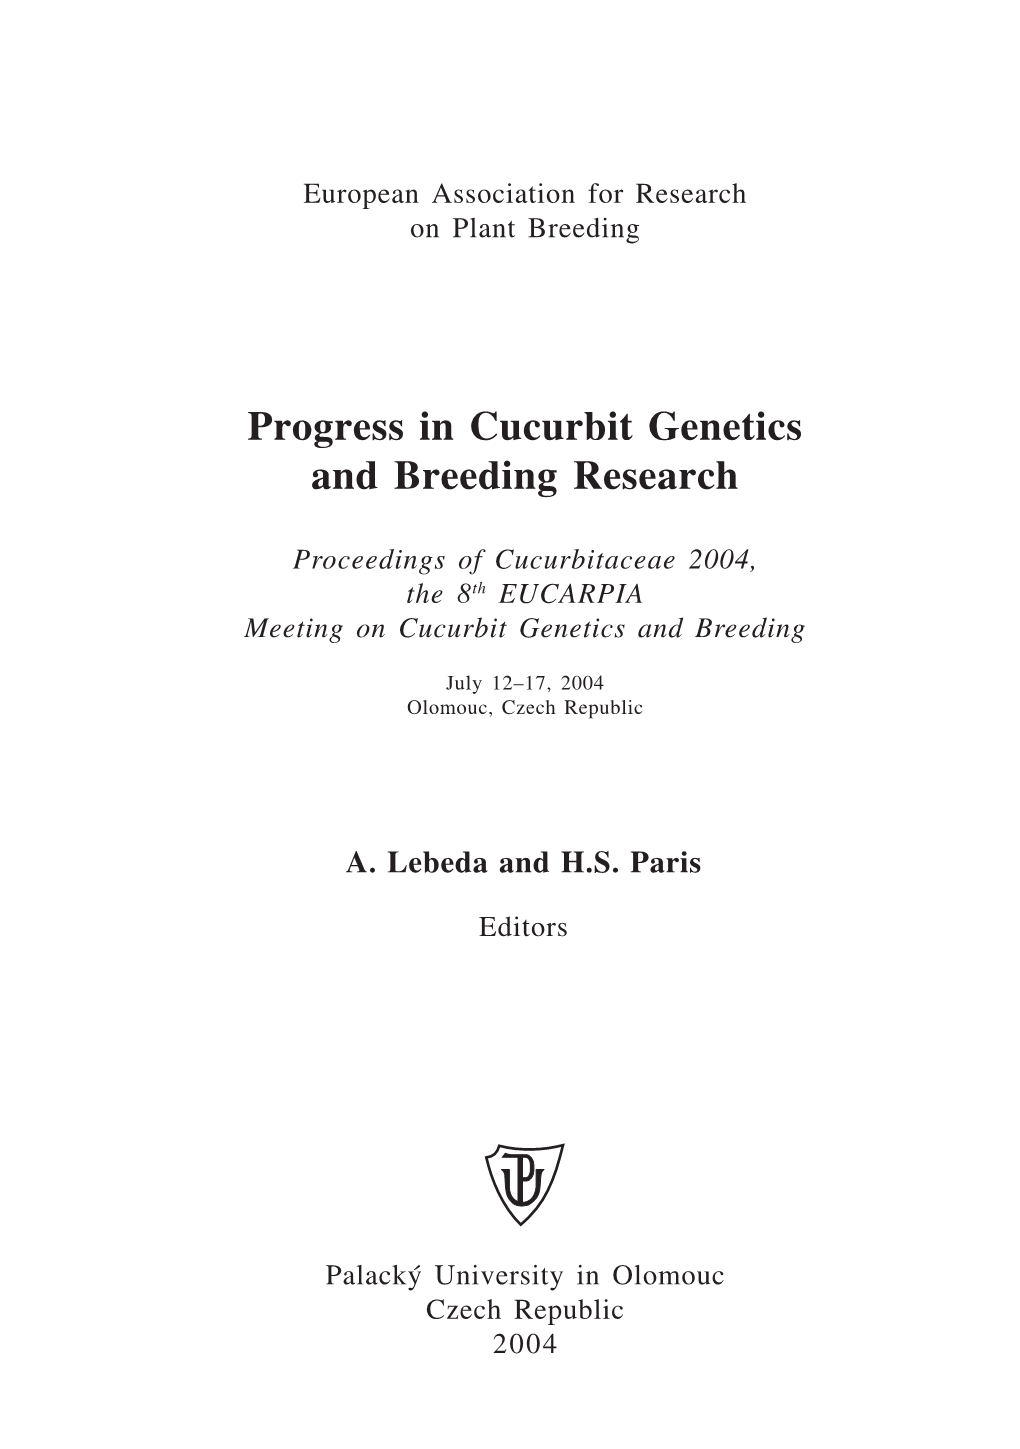 Proceedings of Cucurbitaceae 2004 the 8Th EUCARPIA